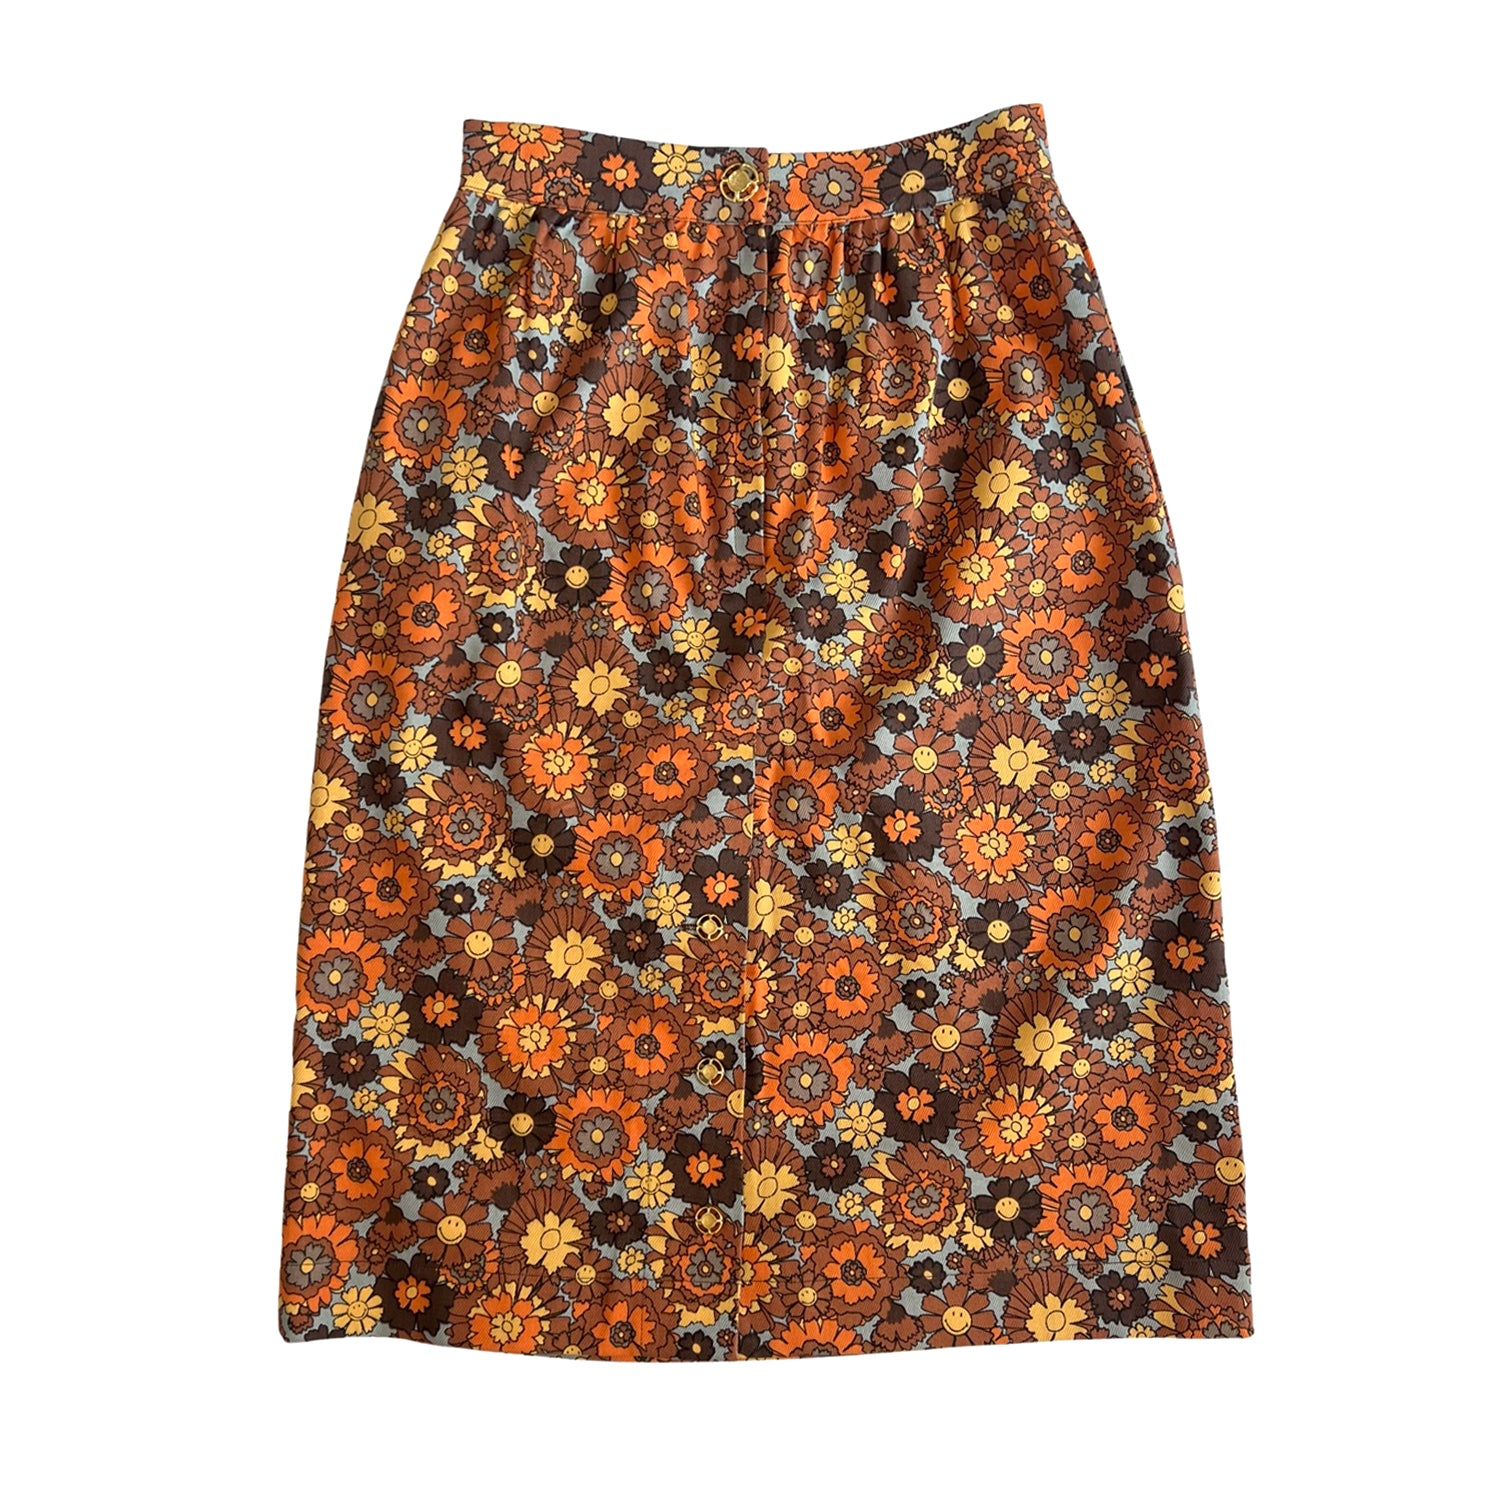 Gathered Midi Skirt in Becky Print in Orange & Brown